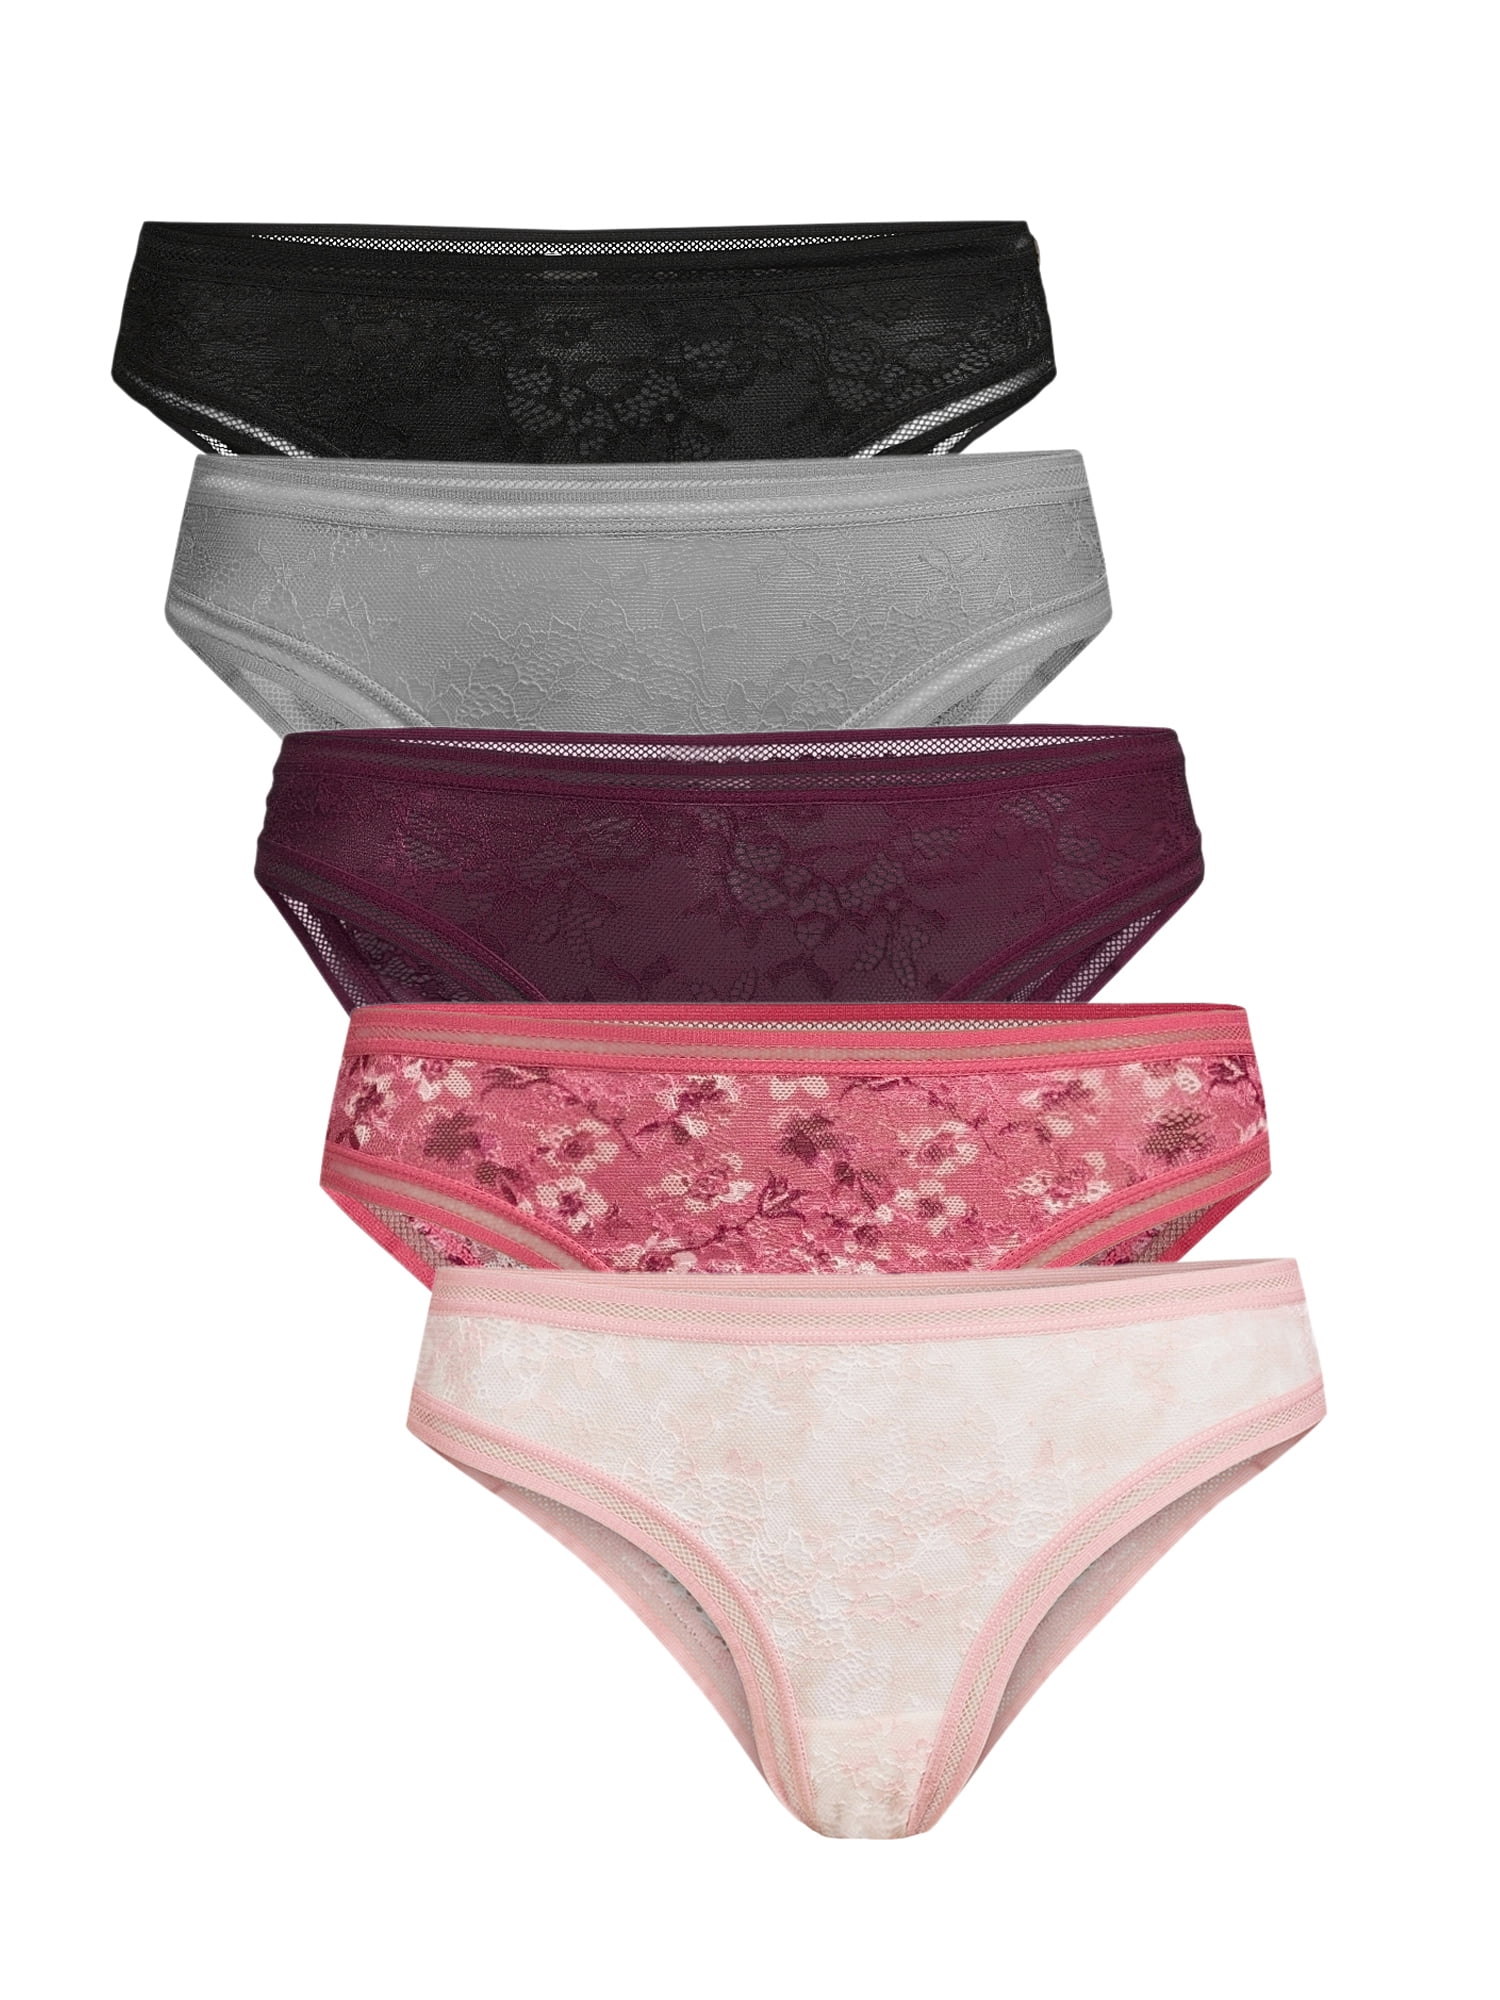 Jessica Simpson Women's Allover Lace Bikini Panties, 5-Pack